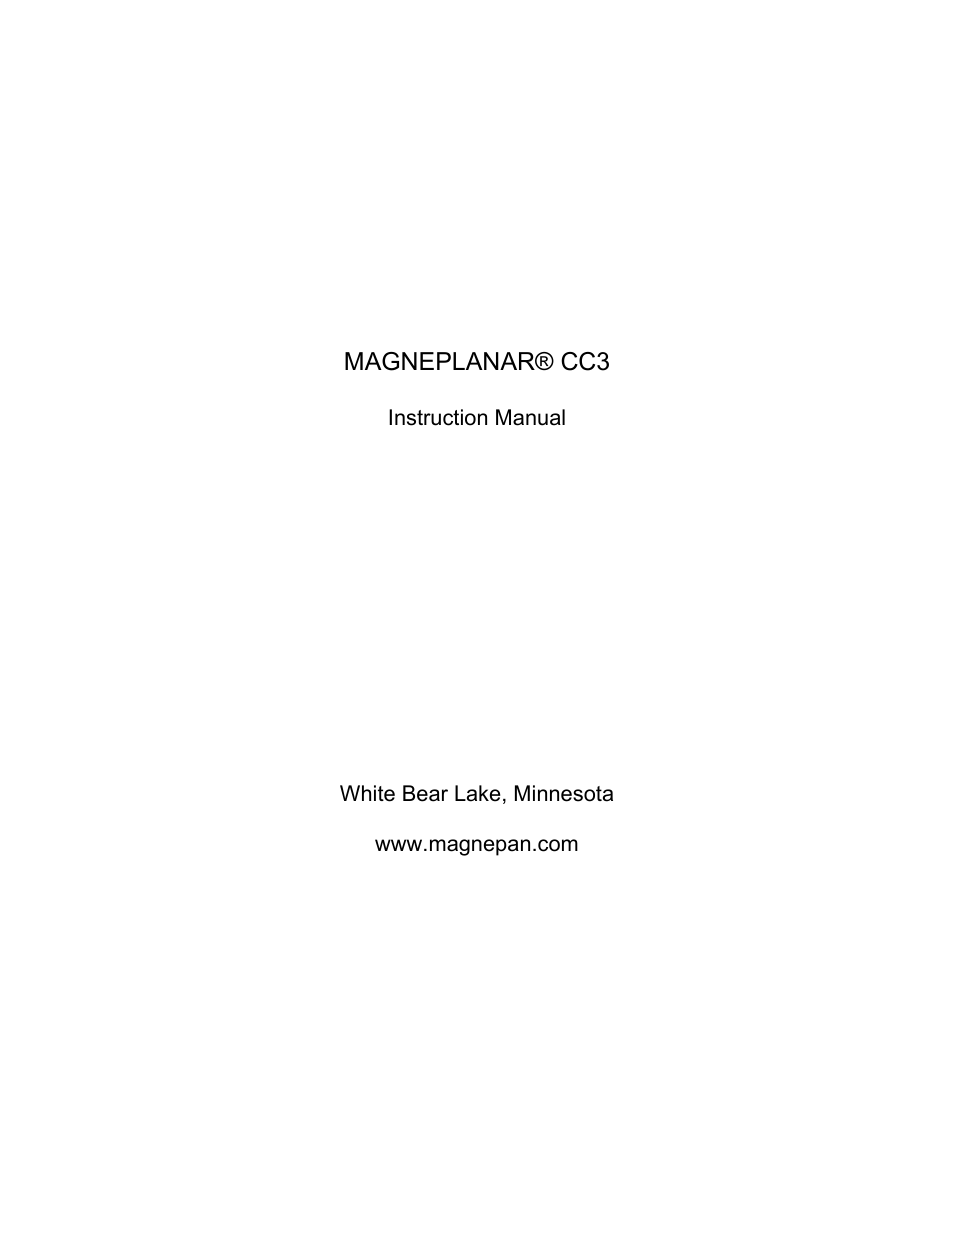 Magneplanar CC3